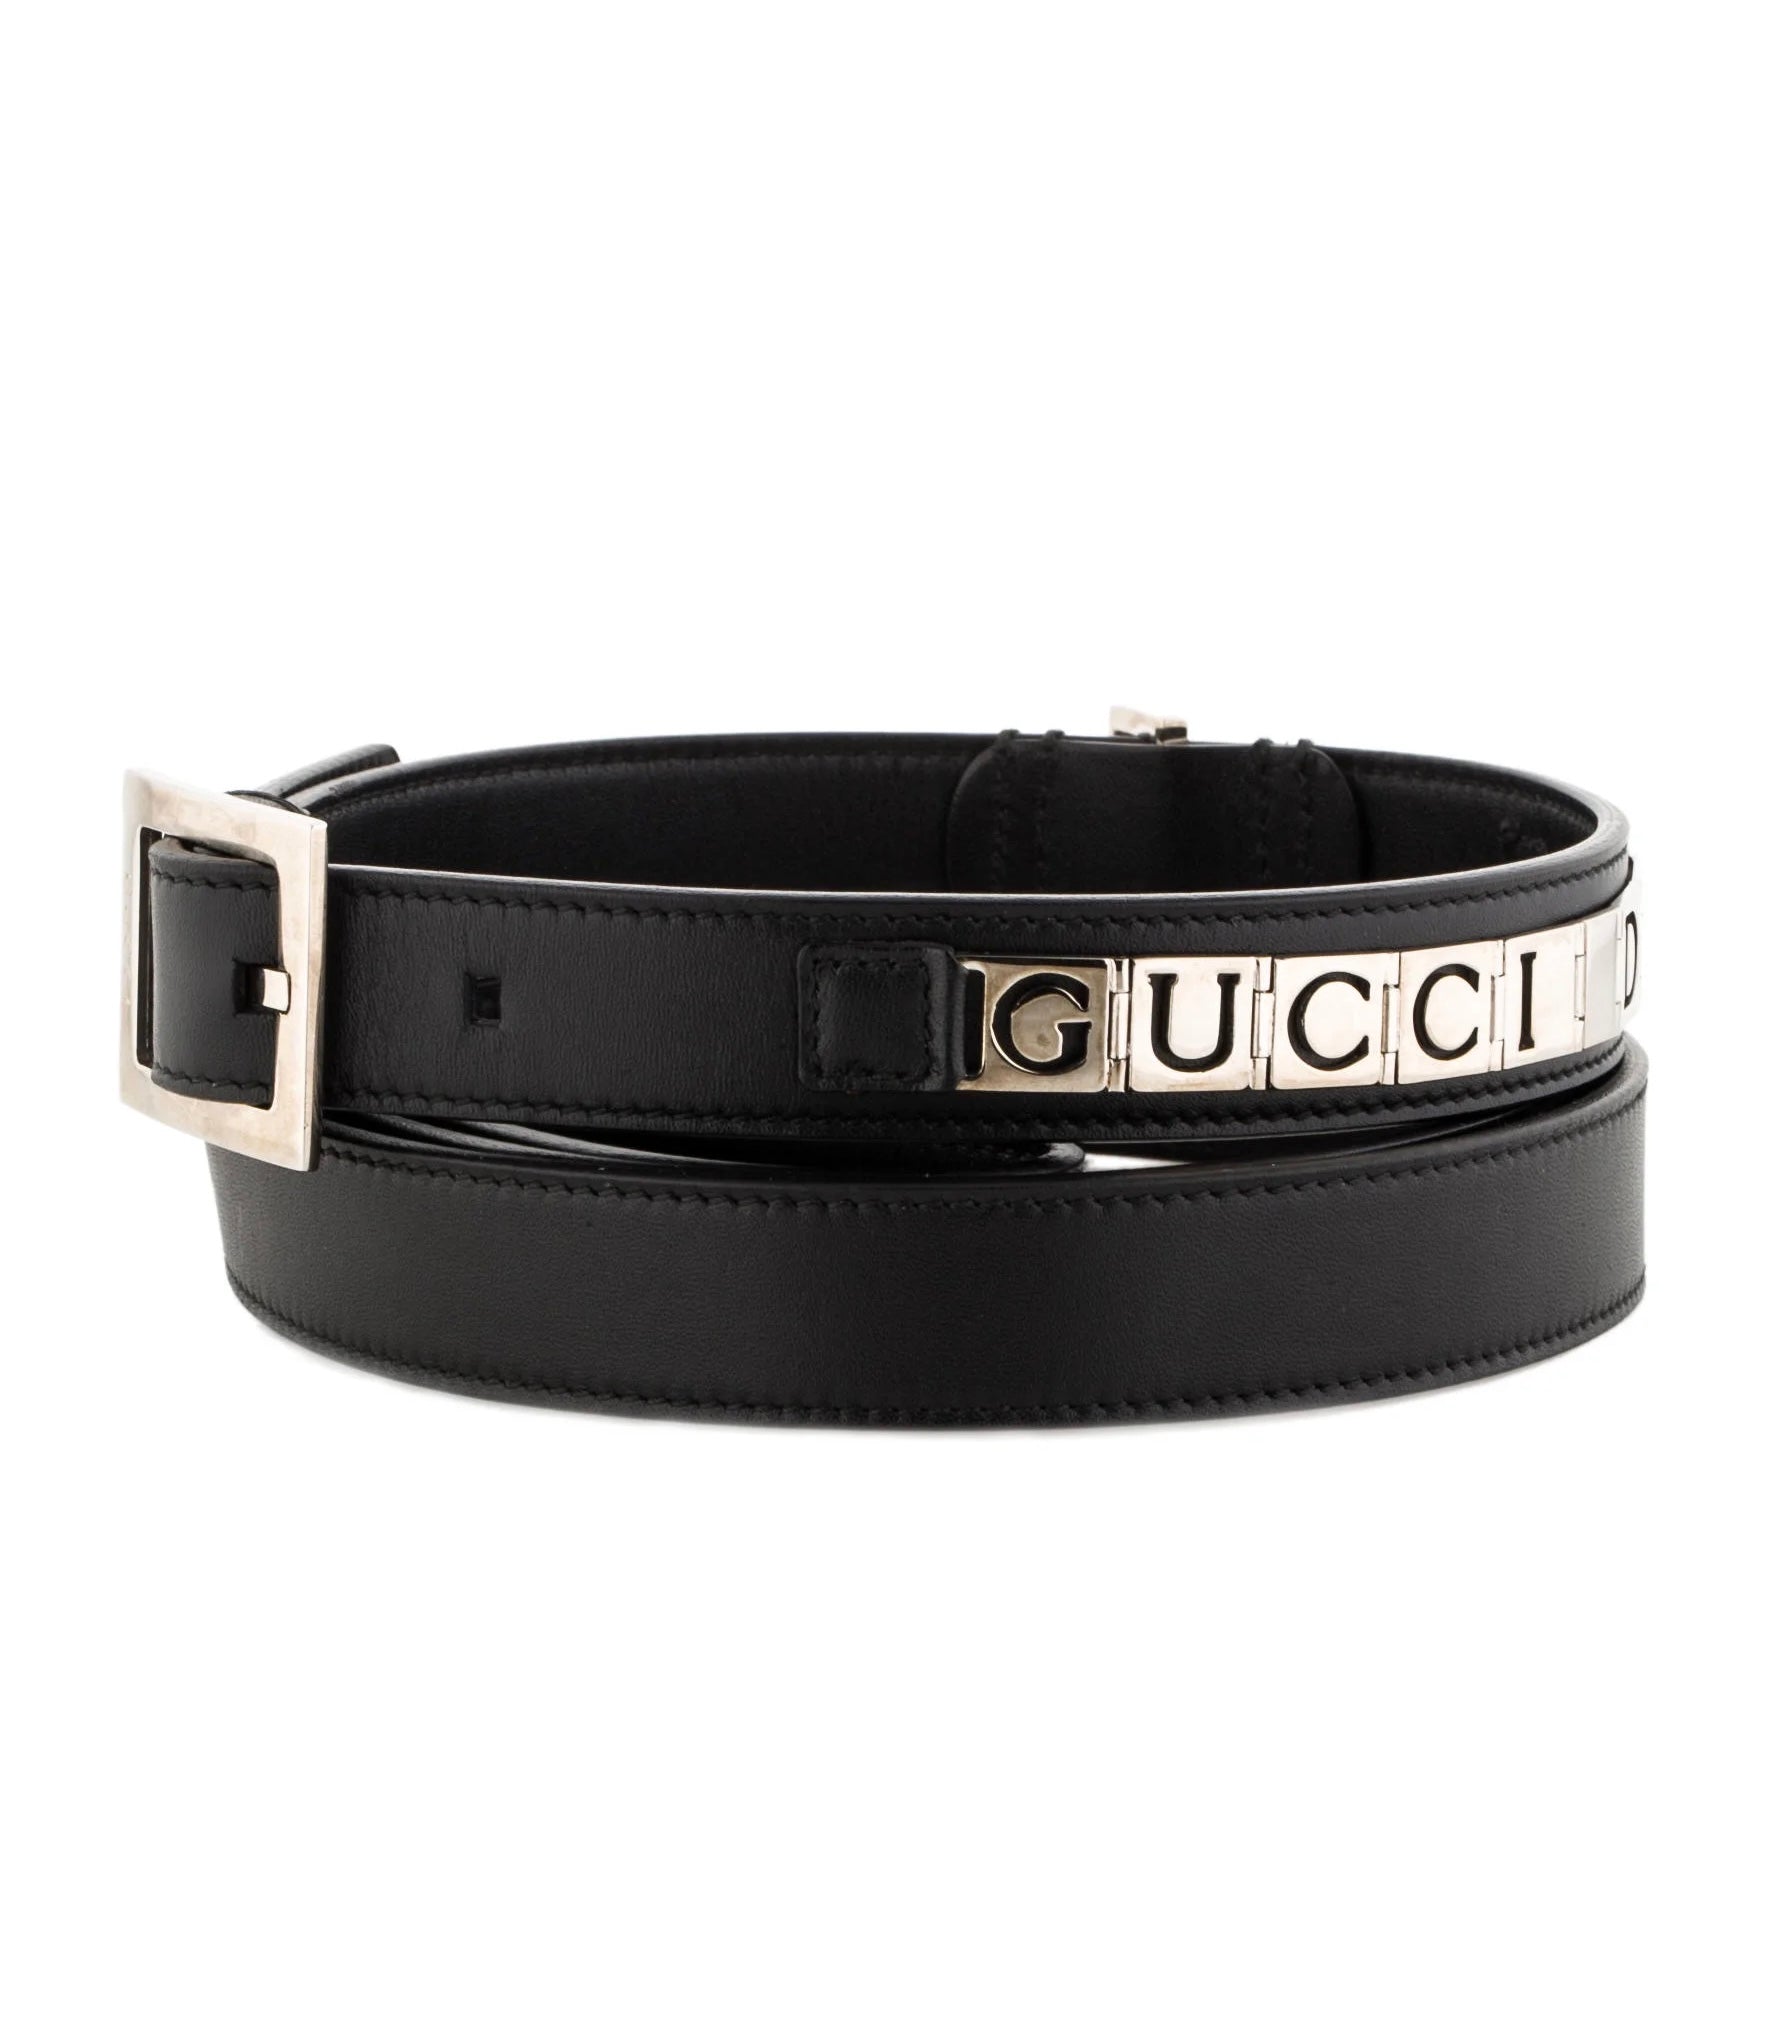 “Gucci Dog” Leash and Collar